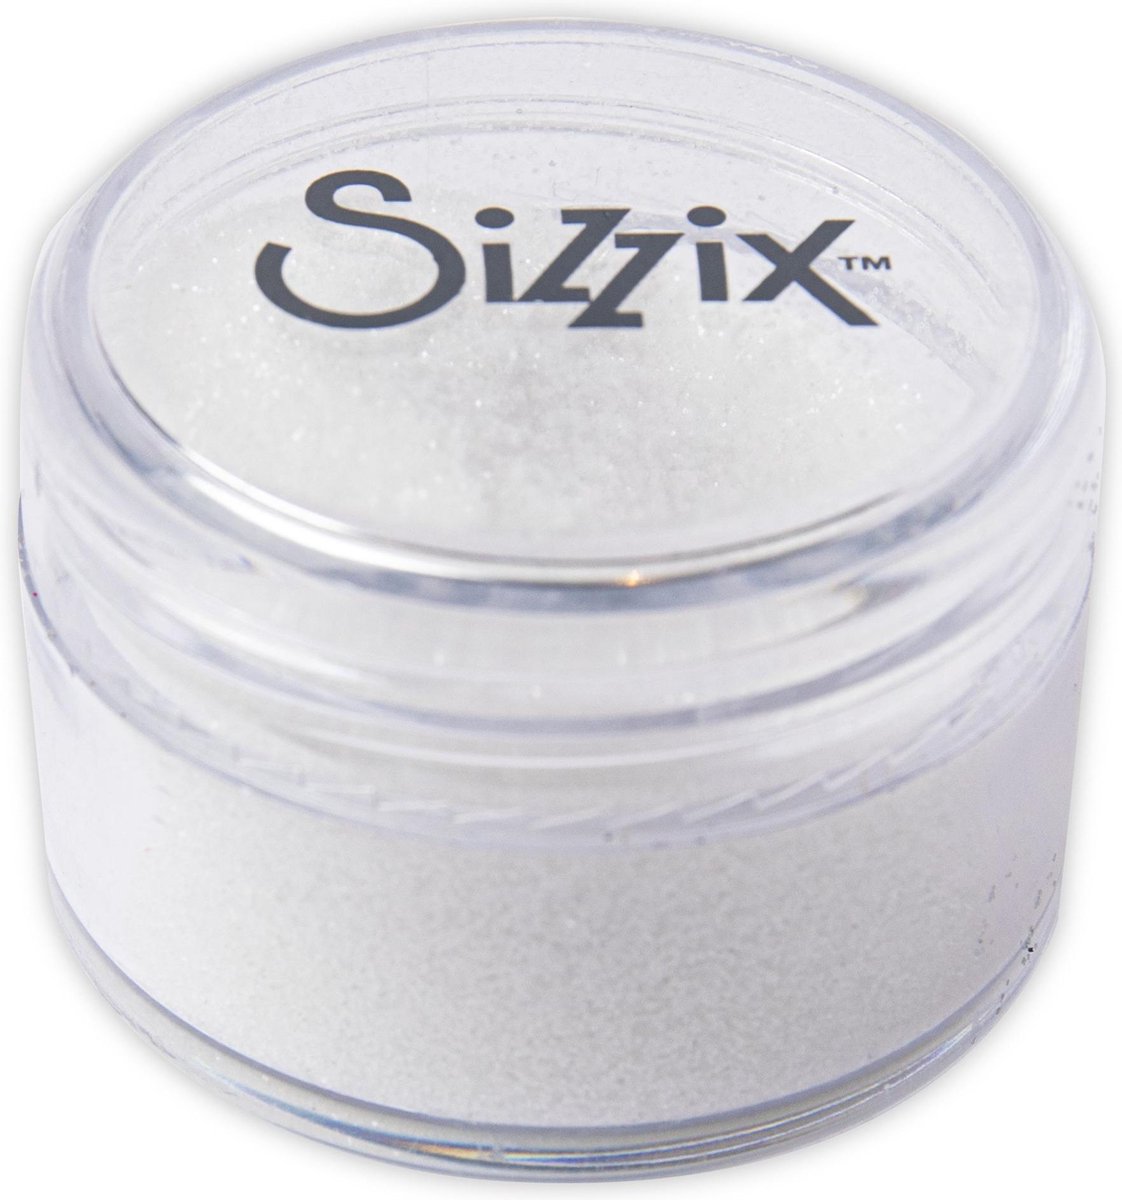 Sizzix Making Essential Fine Biodegradable Glitter Wit